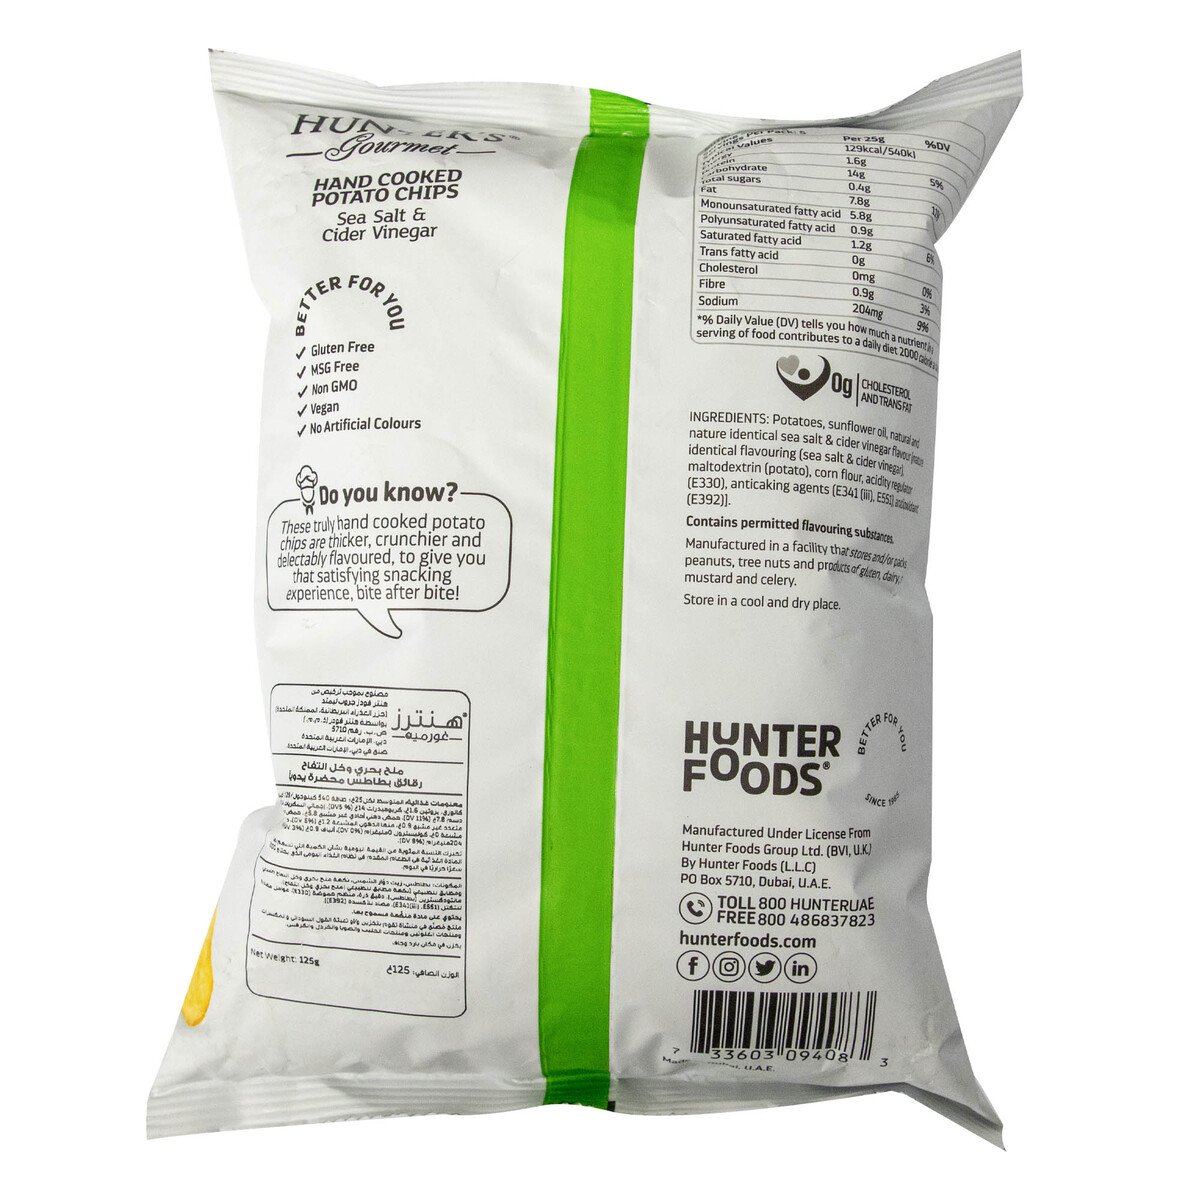 Hunter's Hand Cooked Potato Chips With Sea Salt & Cider Vinegar Flavor 125g